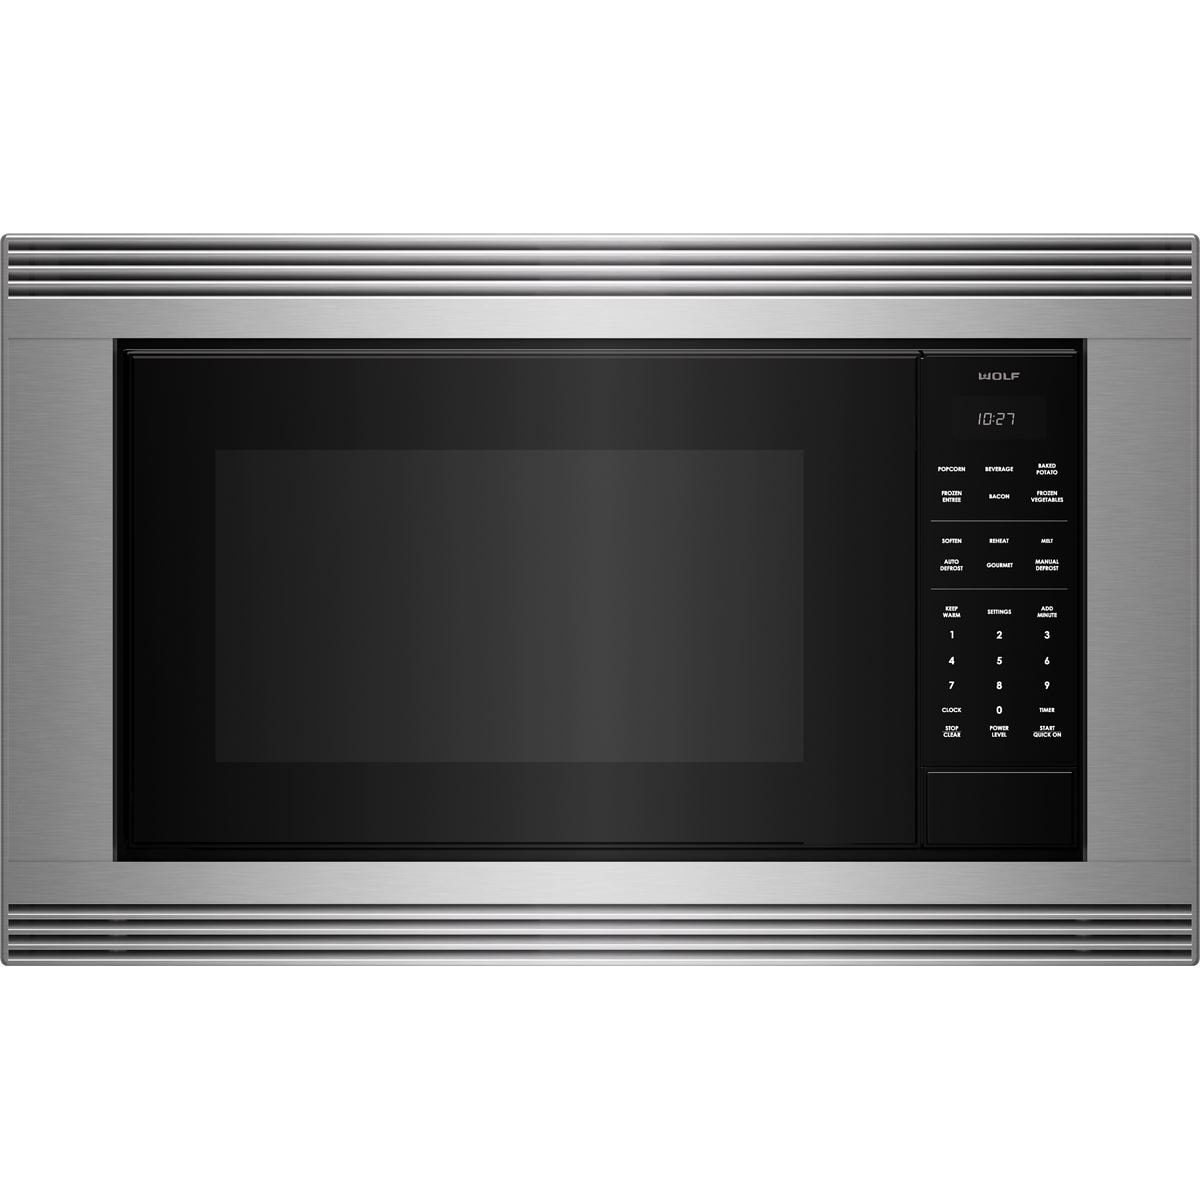 809959-Standard Microwave 27" Stainless Trim - E Series